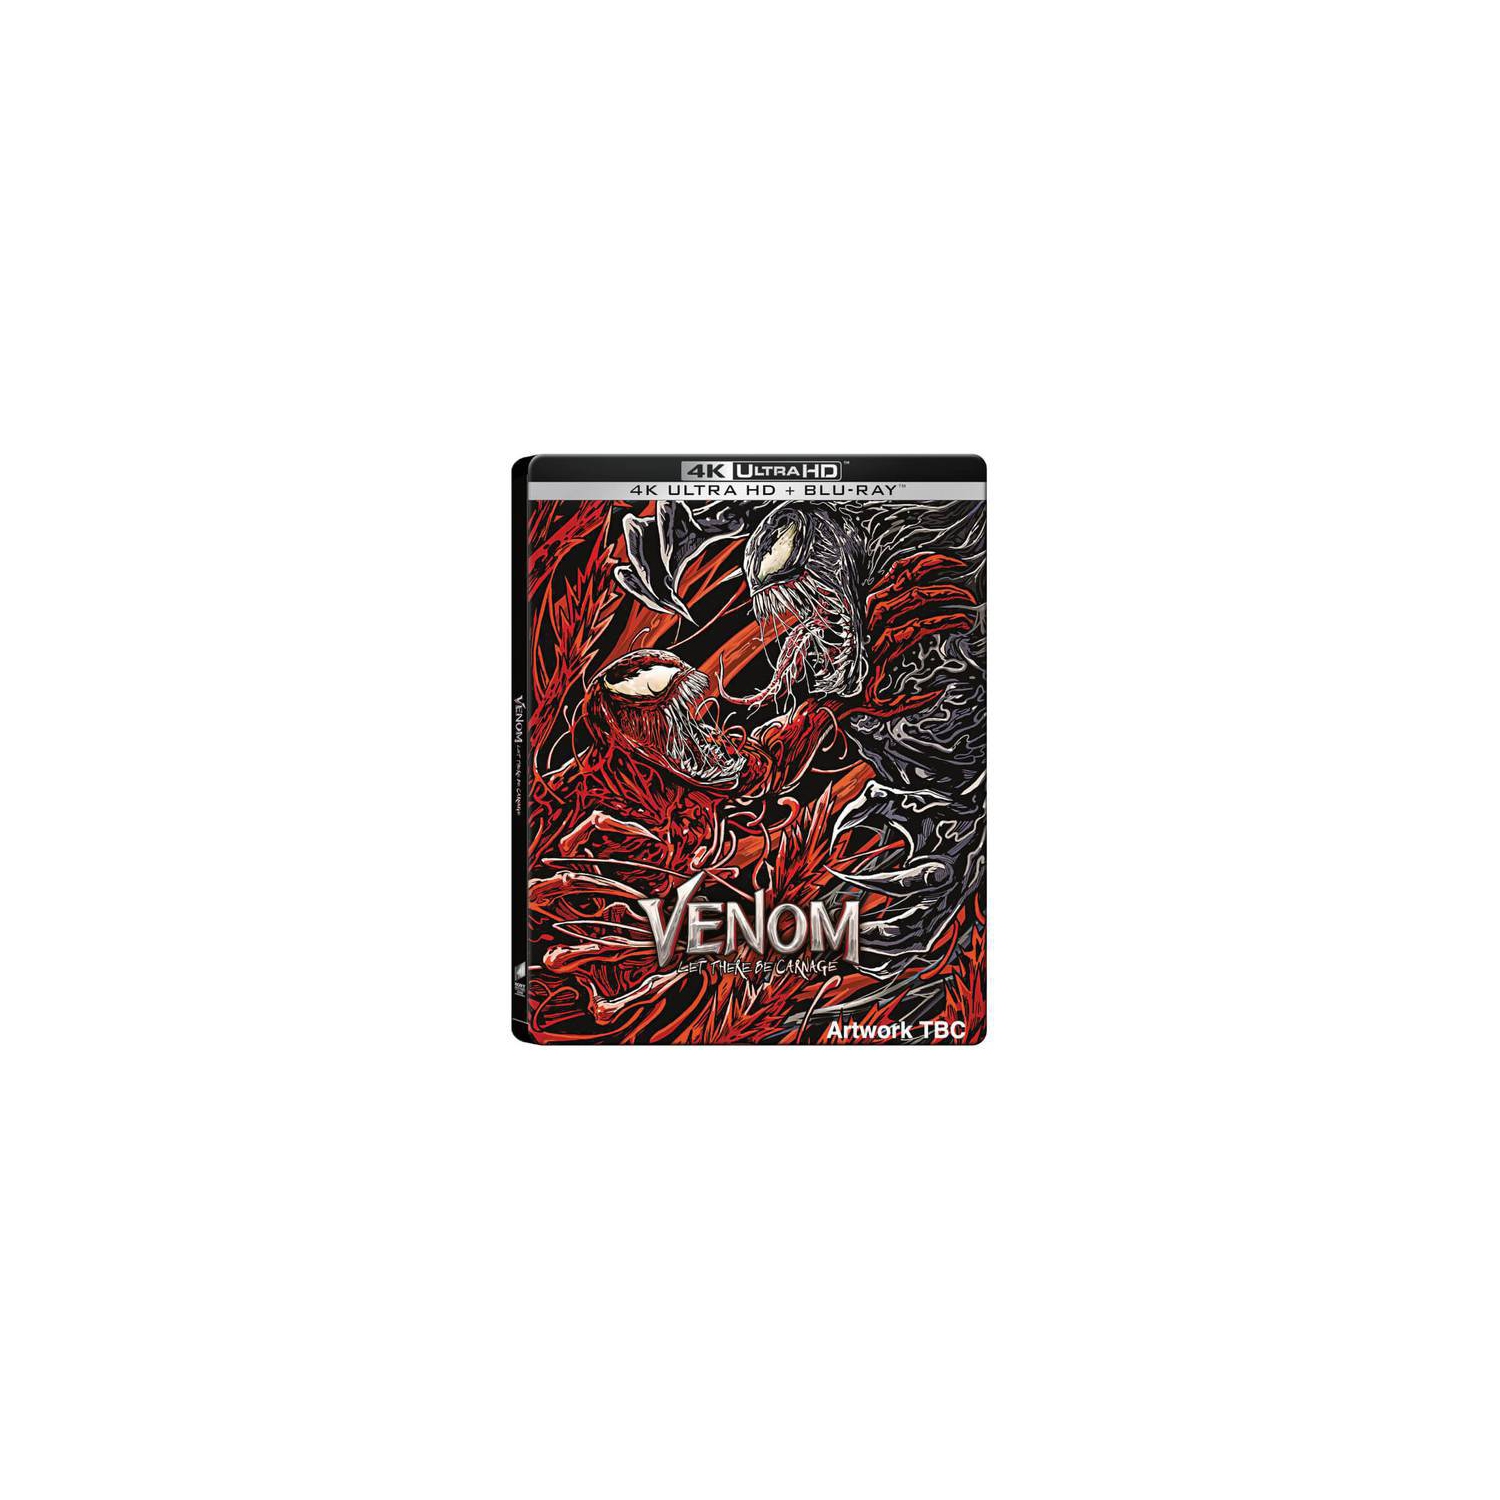 Venom: Let There Be Carnage [SteelBook] [Digital Copy] [4K Ultra HD Blu-ray/Blu-ray] [Only @ Best Buy]